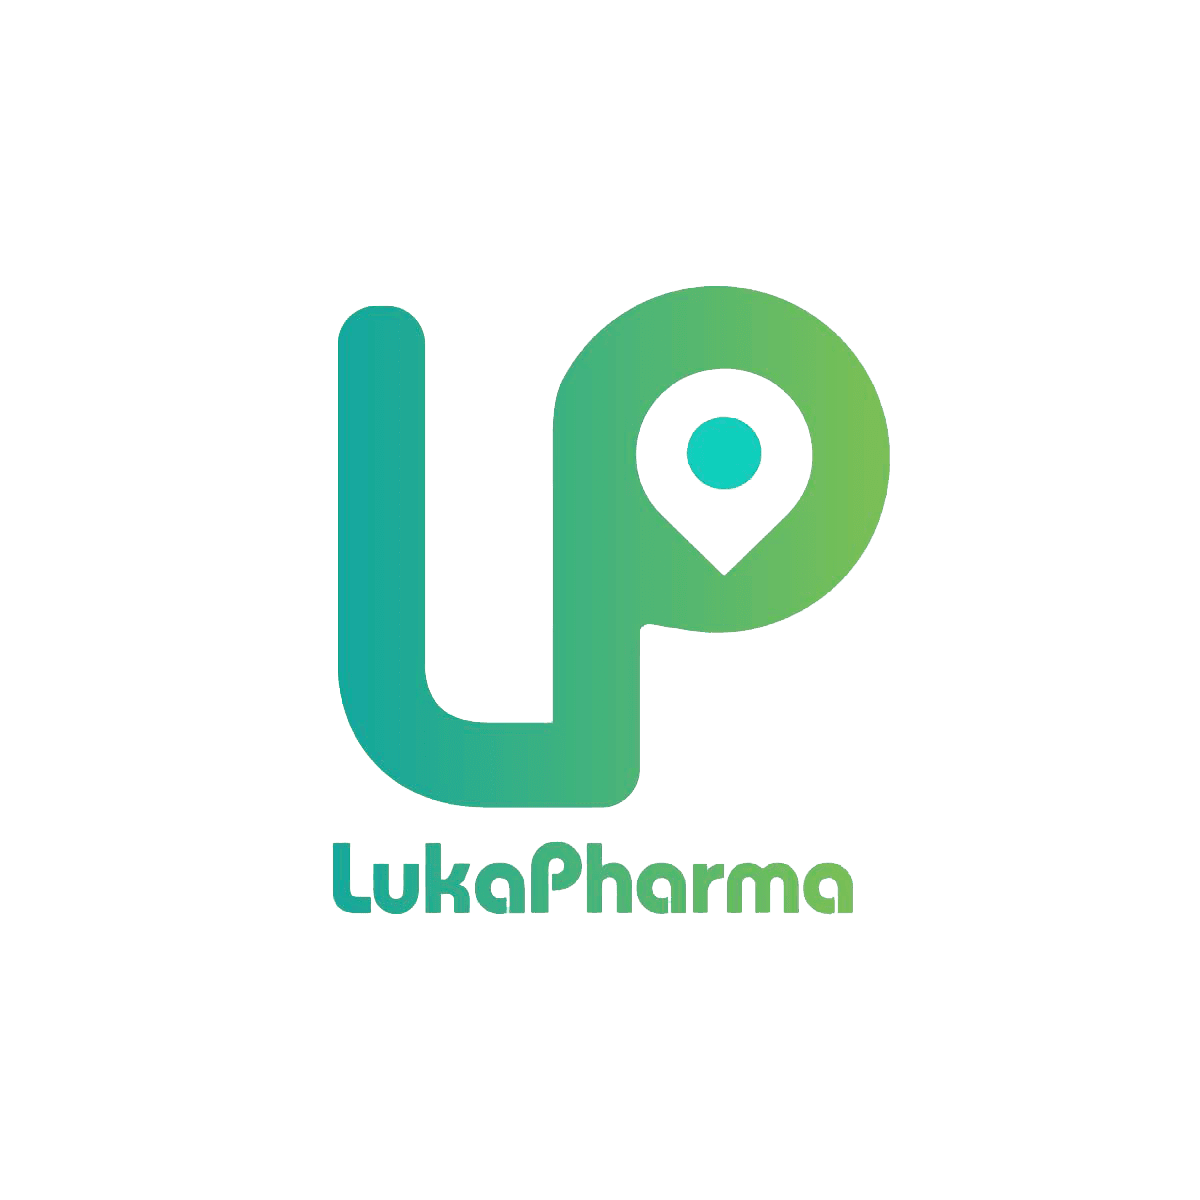 Luka Pharma company logo